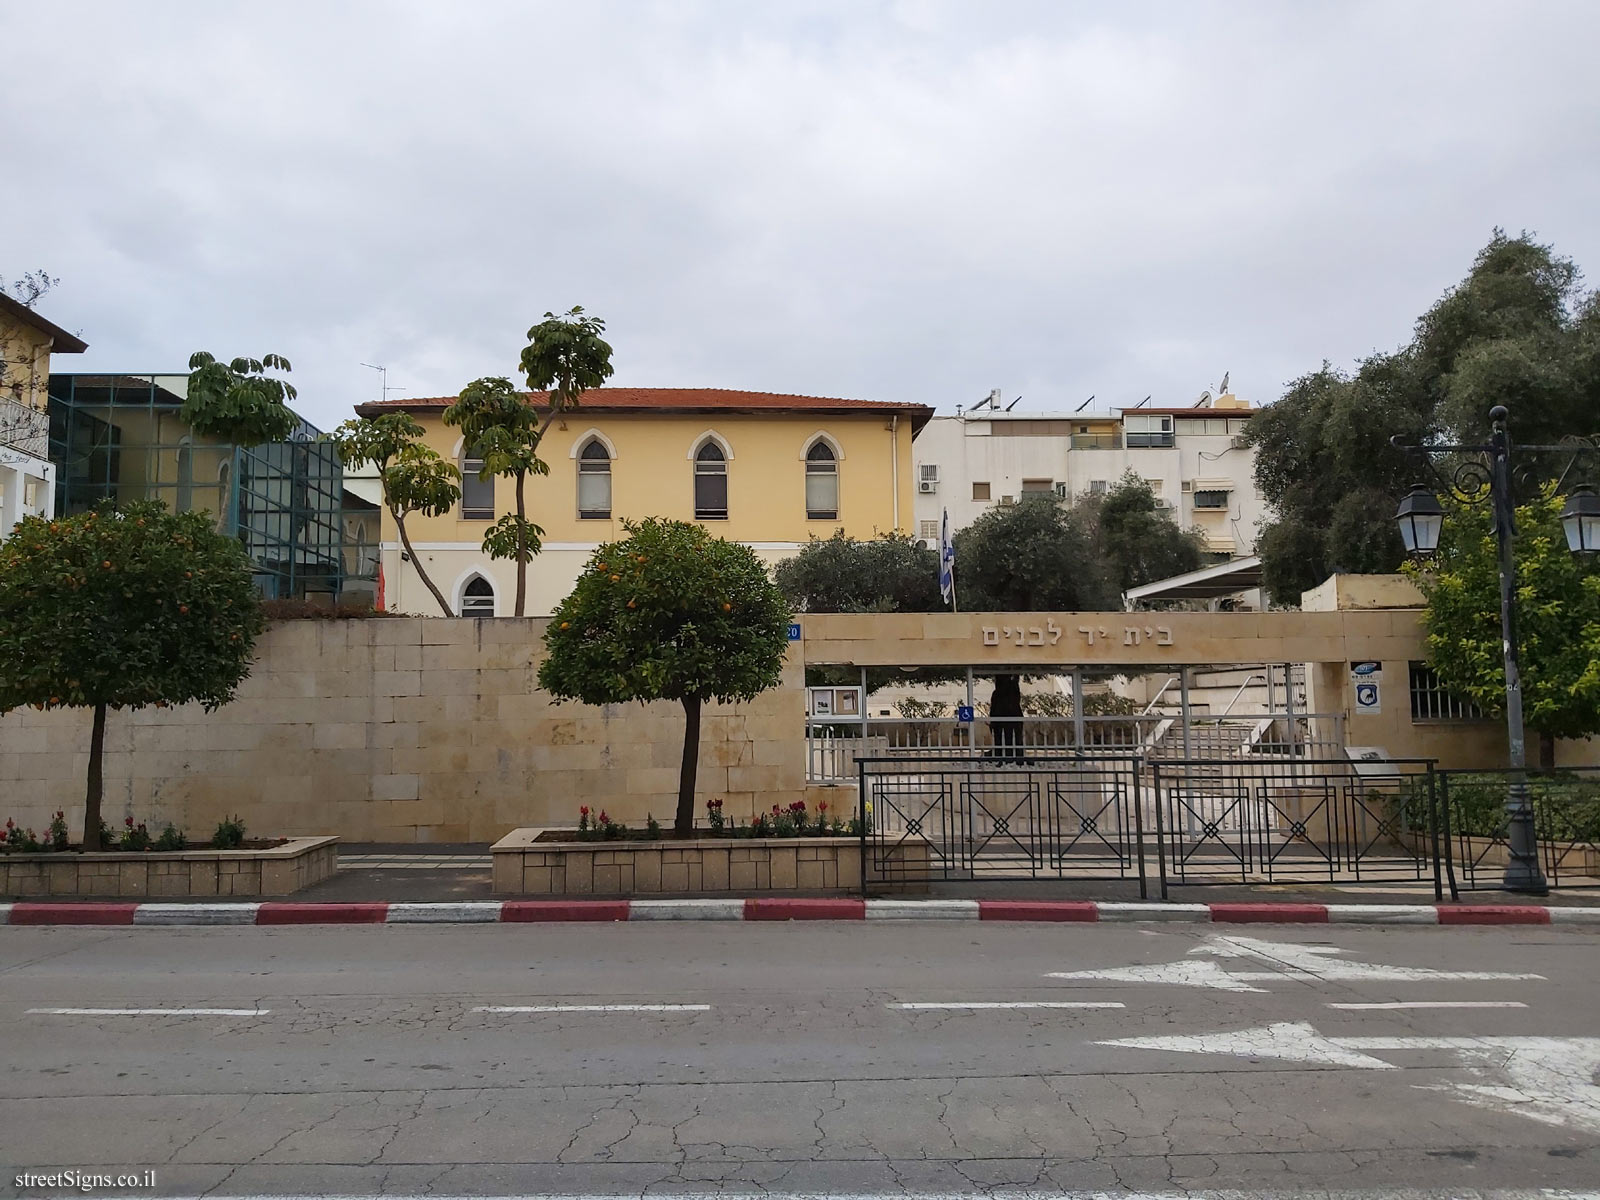 Yad La’Banim - Administration Center - Akhad ha-Am St 20, Rishon LeTsiyon, Israel